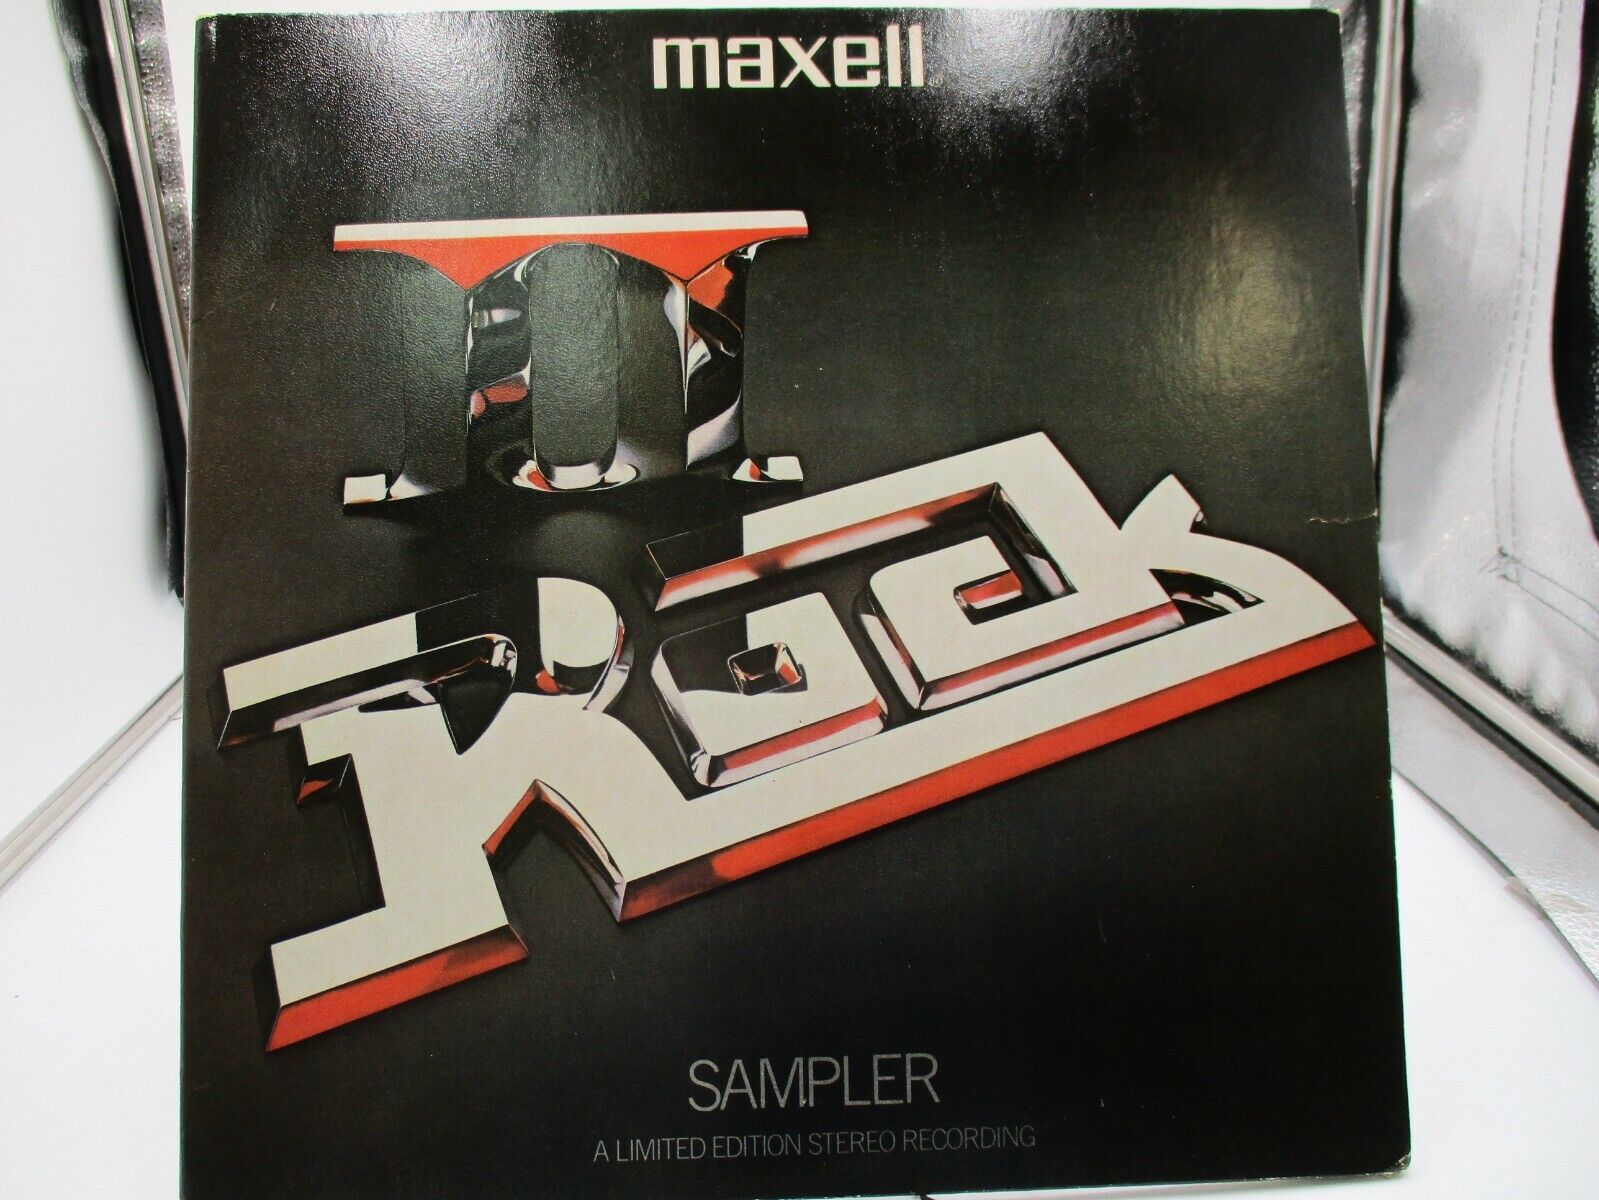 Maxell Rock II Sampler Vinyl LP Record 1980 DPL 1-0466 LP NM Ultrasonic Clean